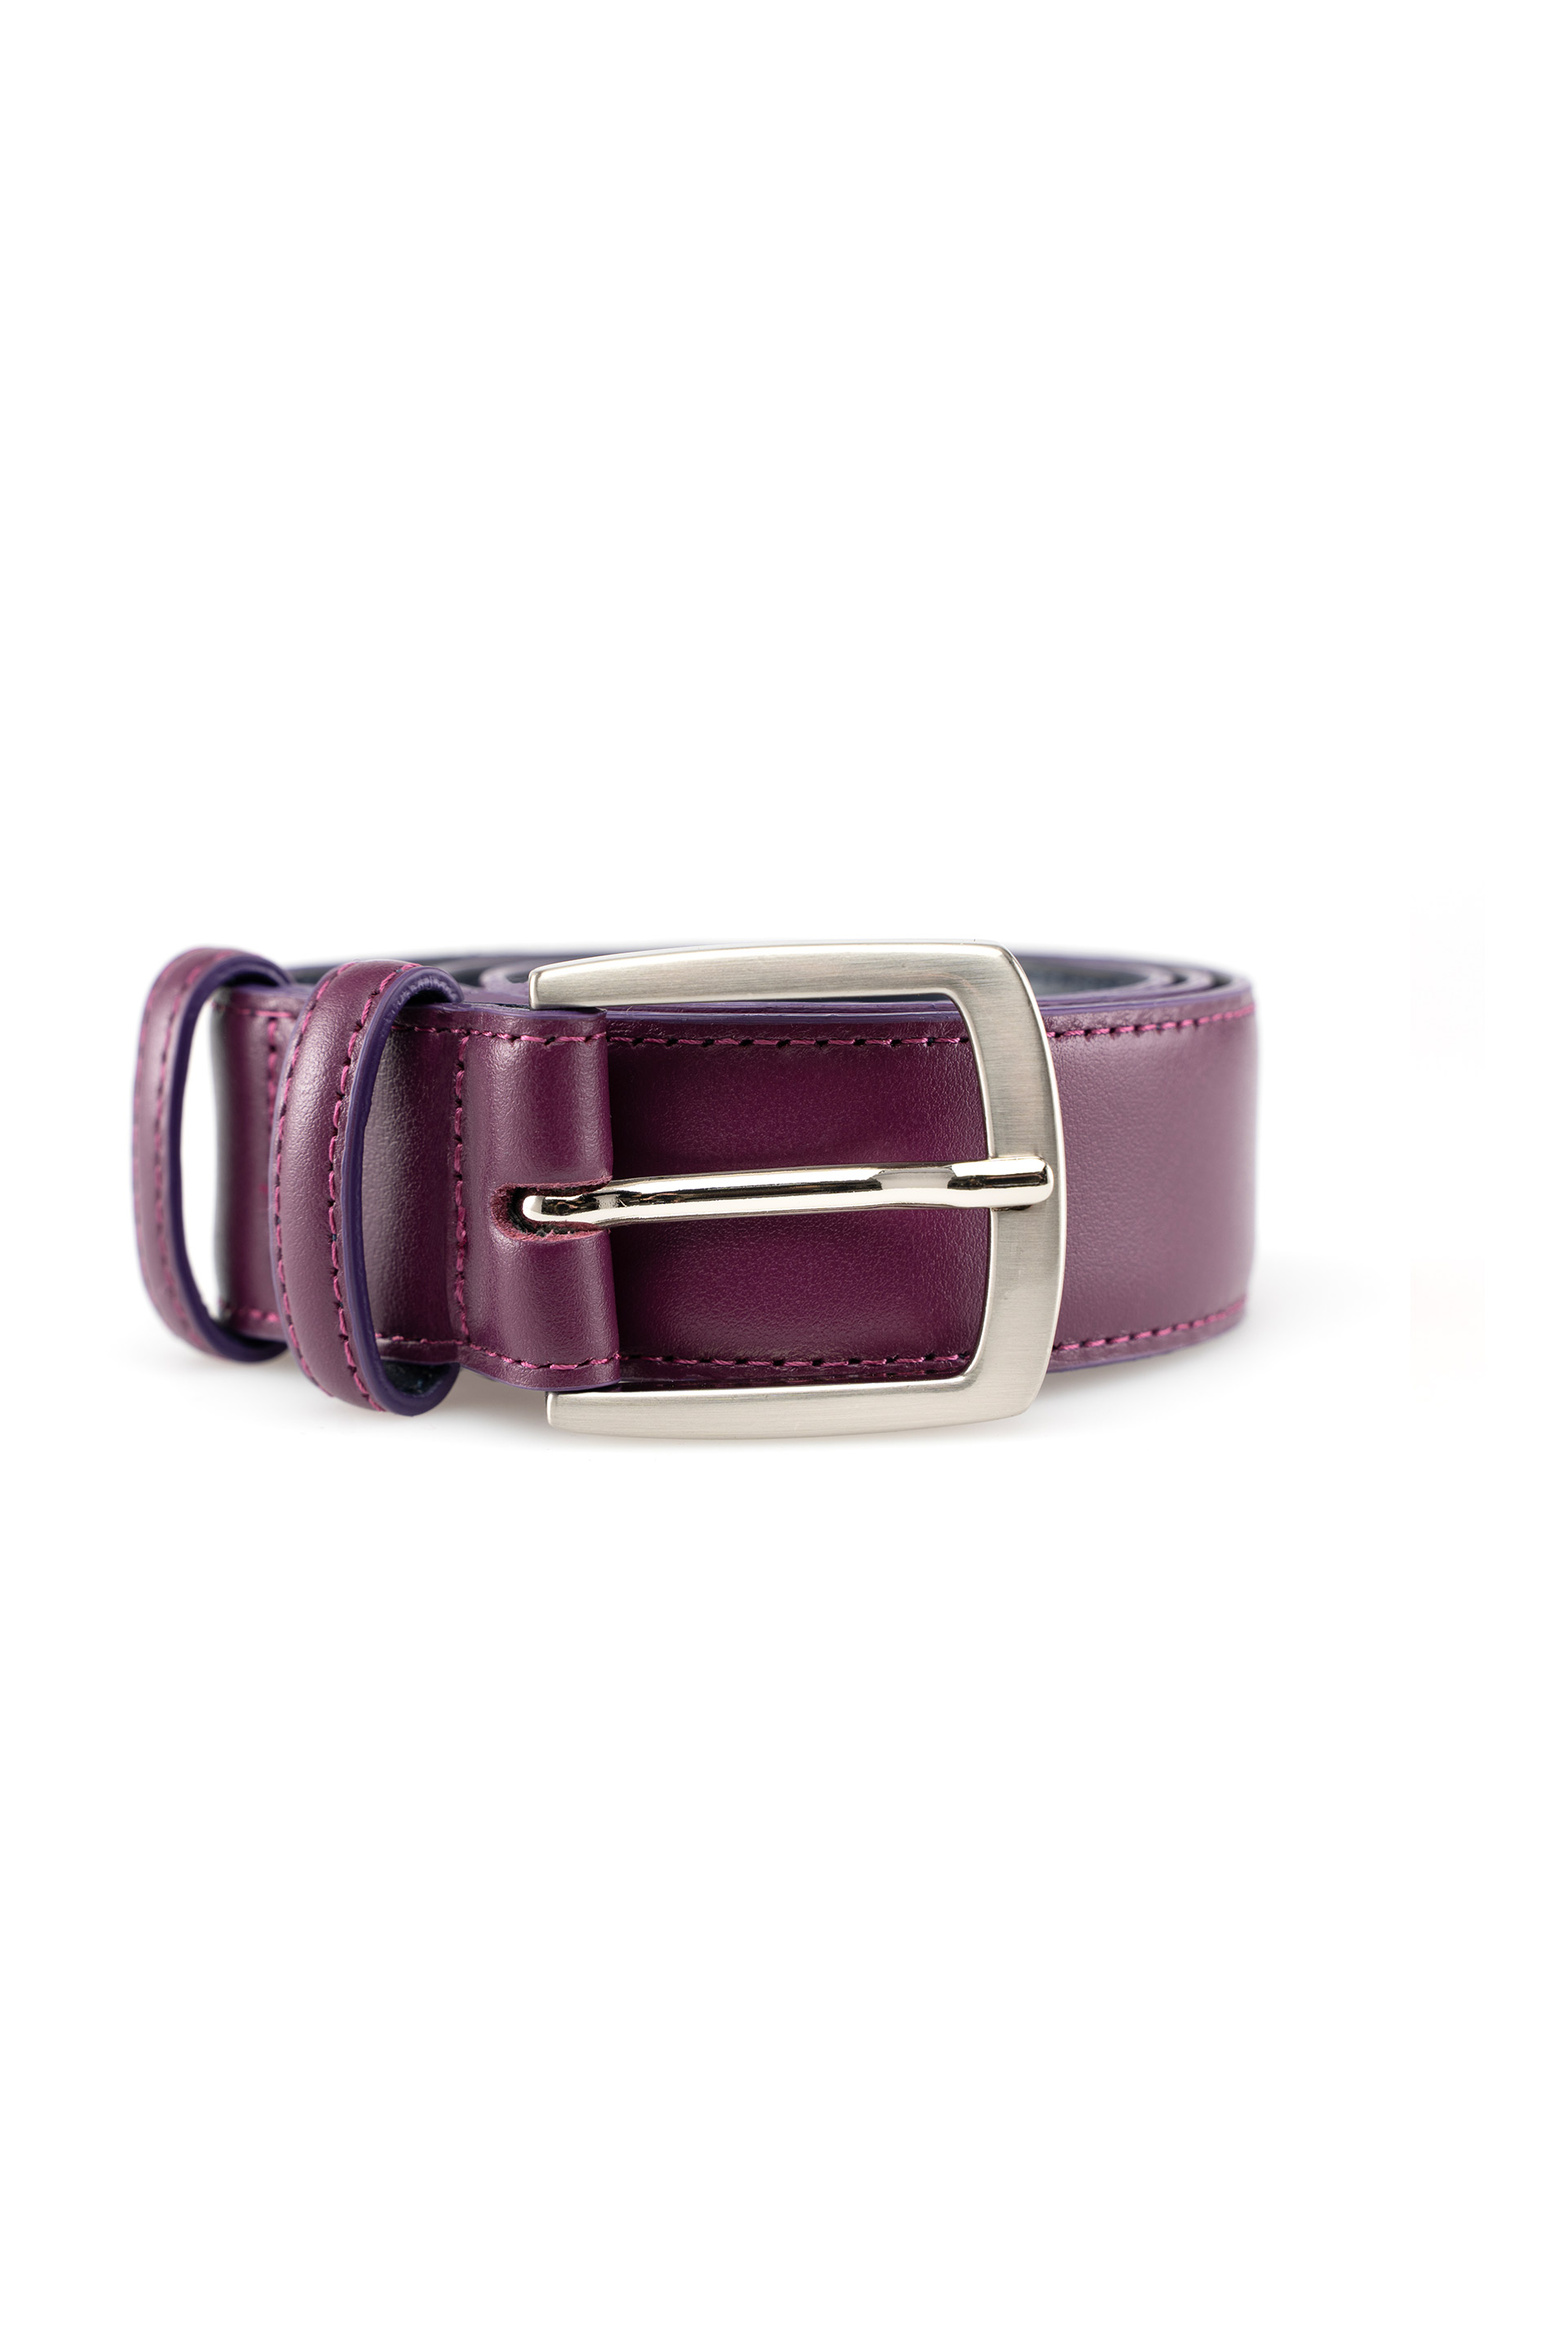 be150_classic-leather-belt_italian_plum.jpg